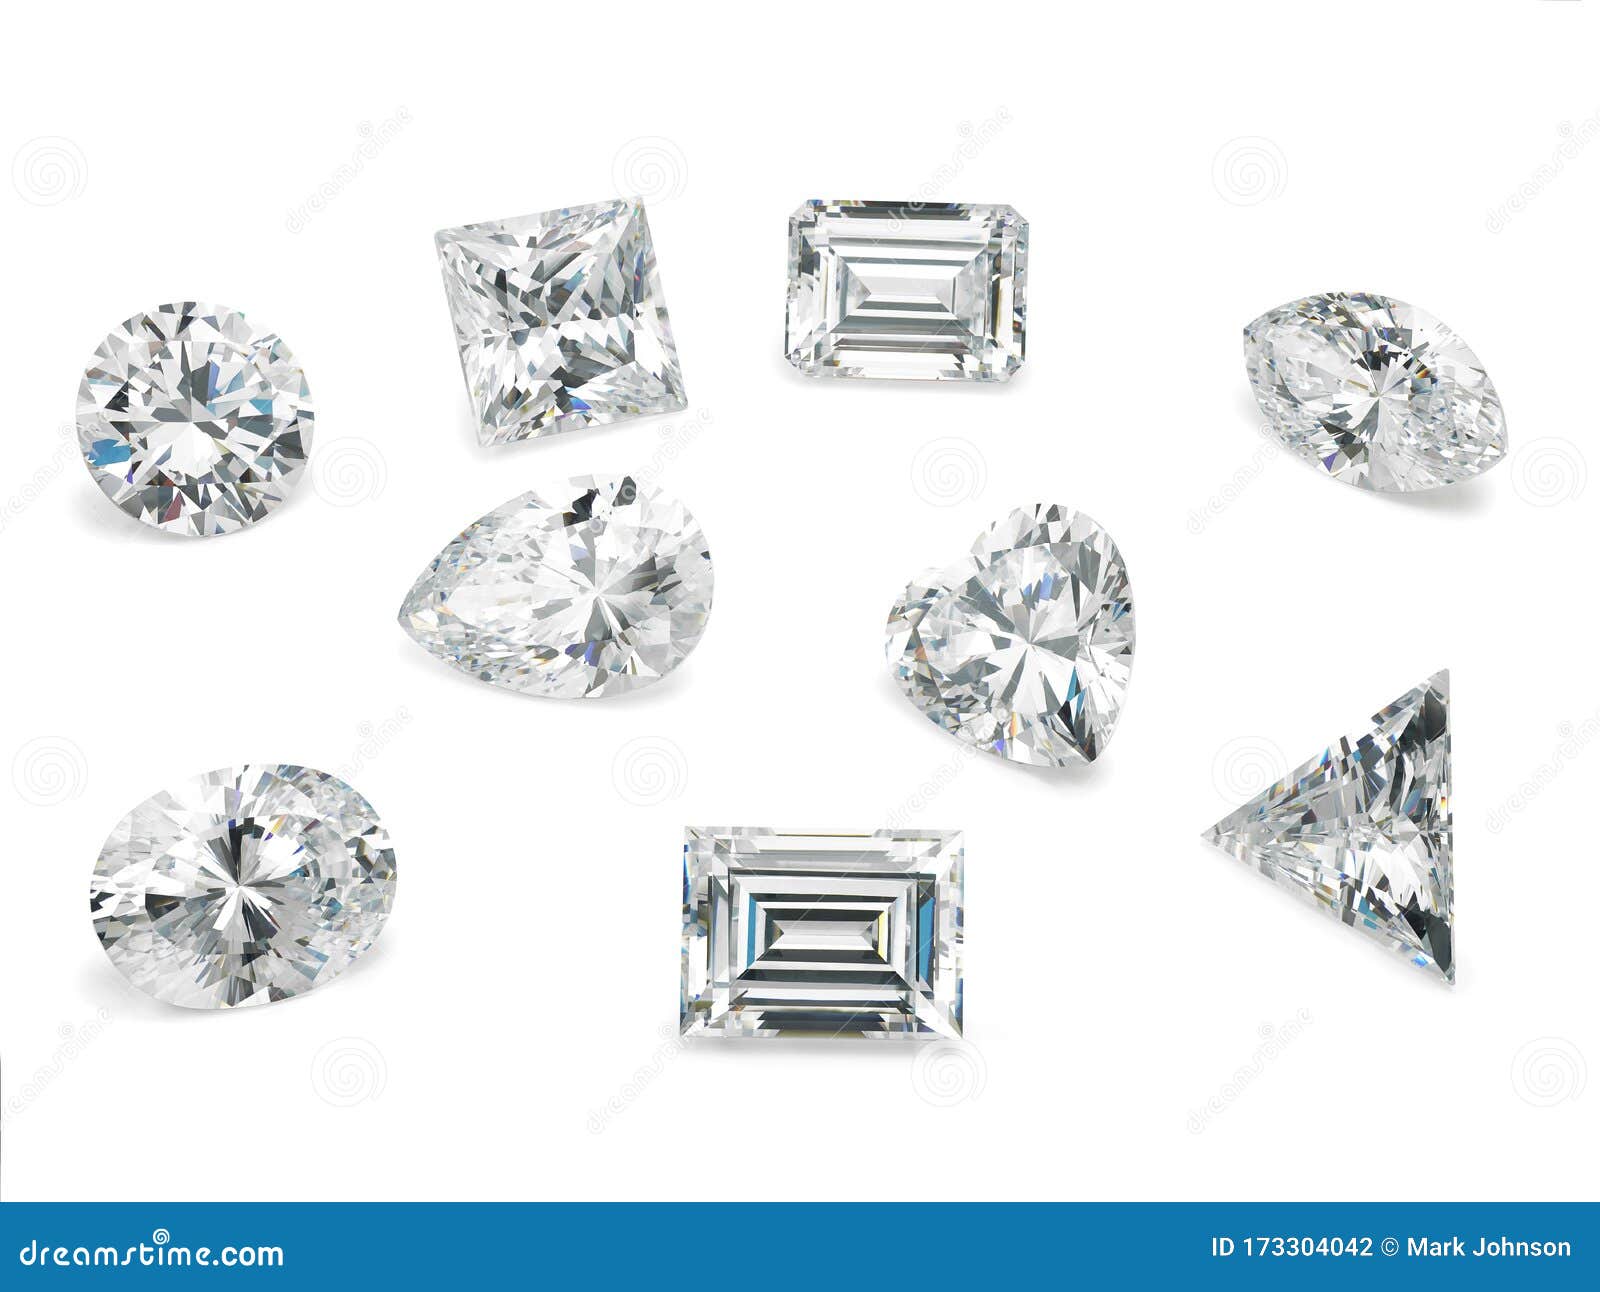 diamond s on white background - fancy polished diamond s